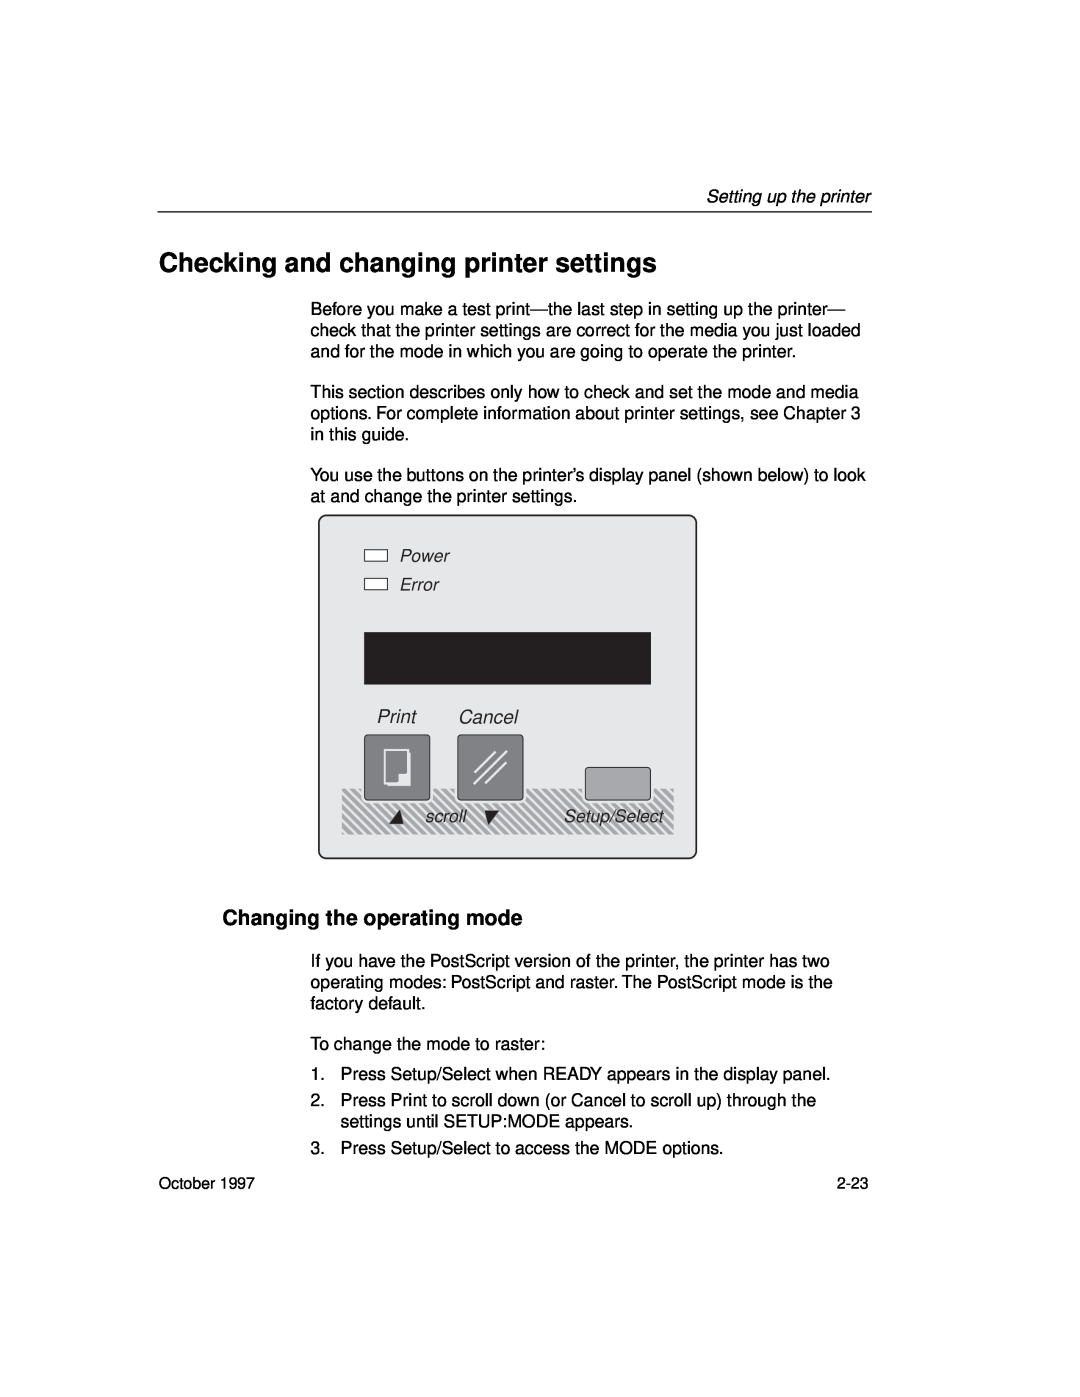 Kodak 8650 manual Checking and changing printer settings, Changing the operating mode, Print Cancel, Power Error 